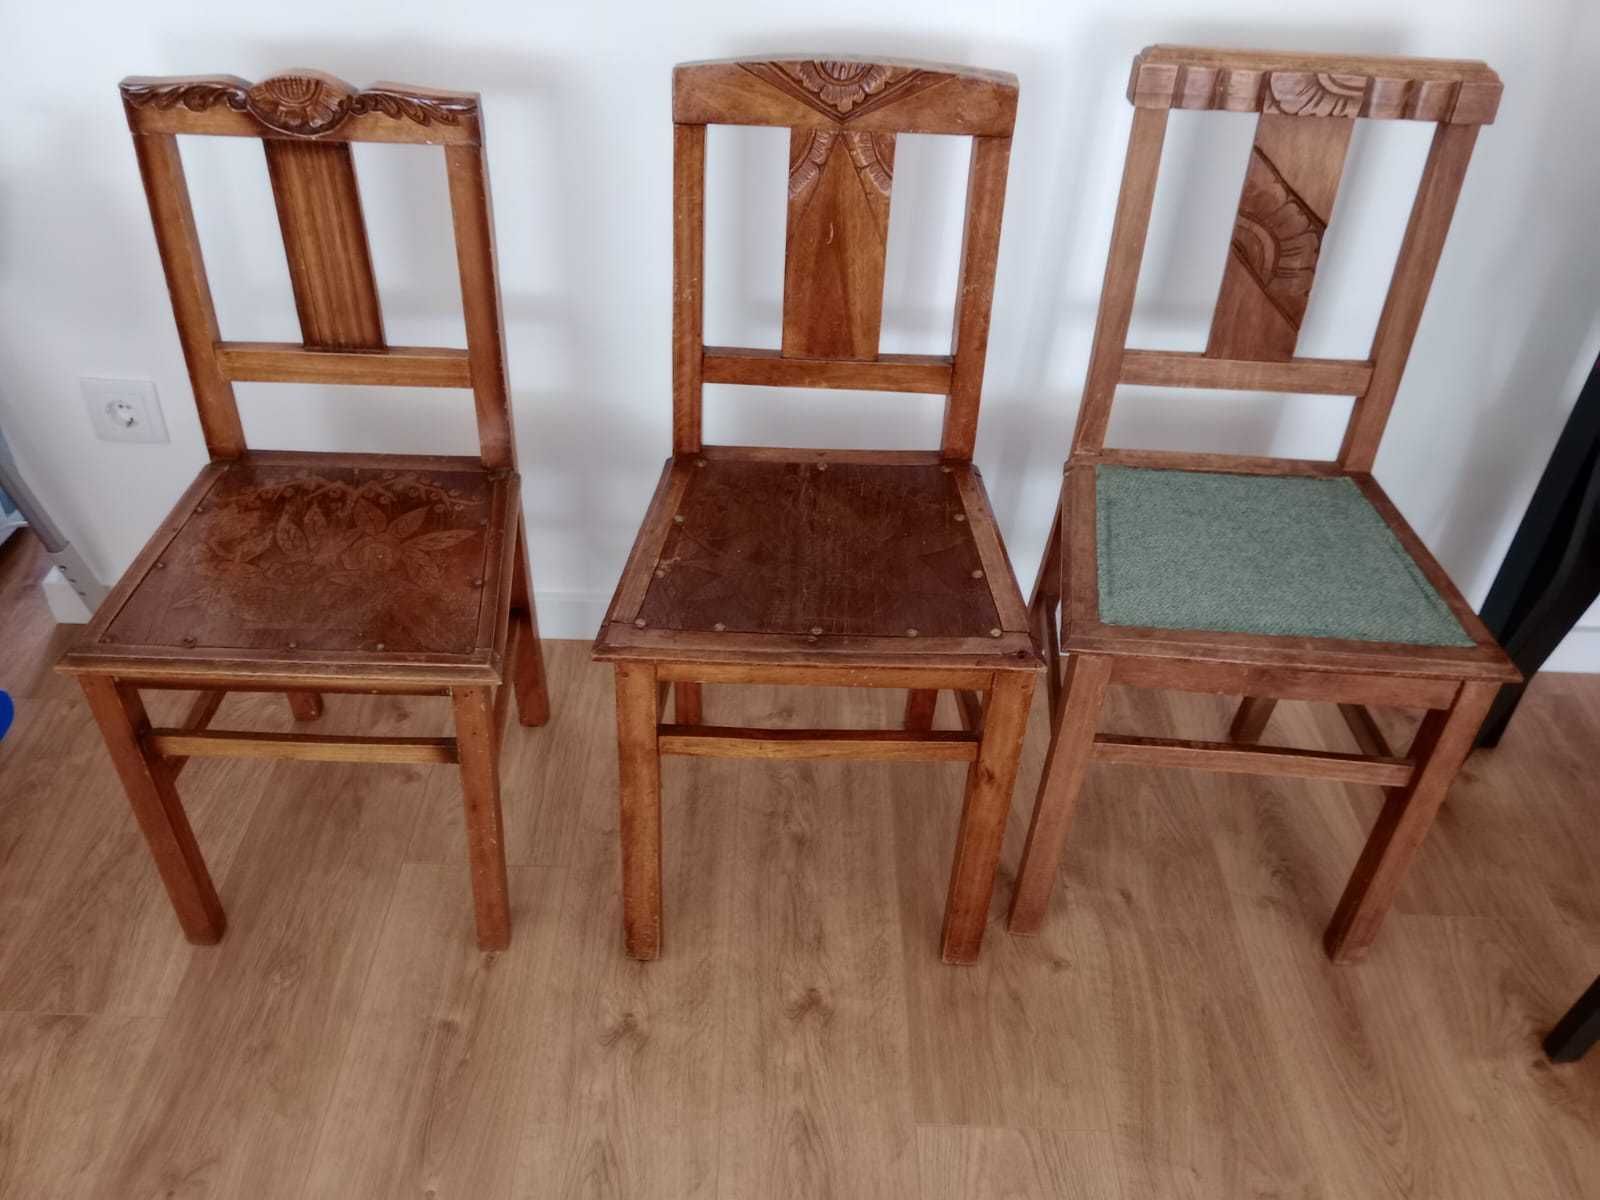 3 cadeiras antigas